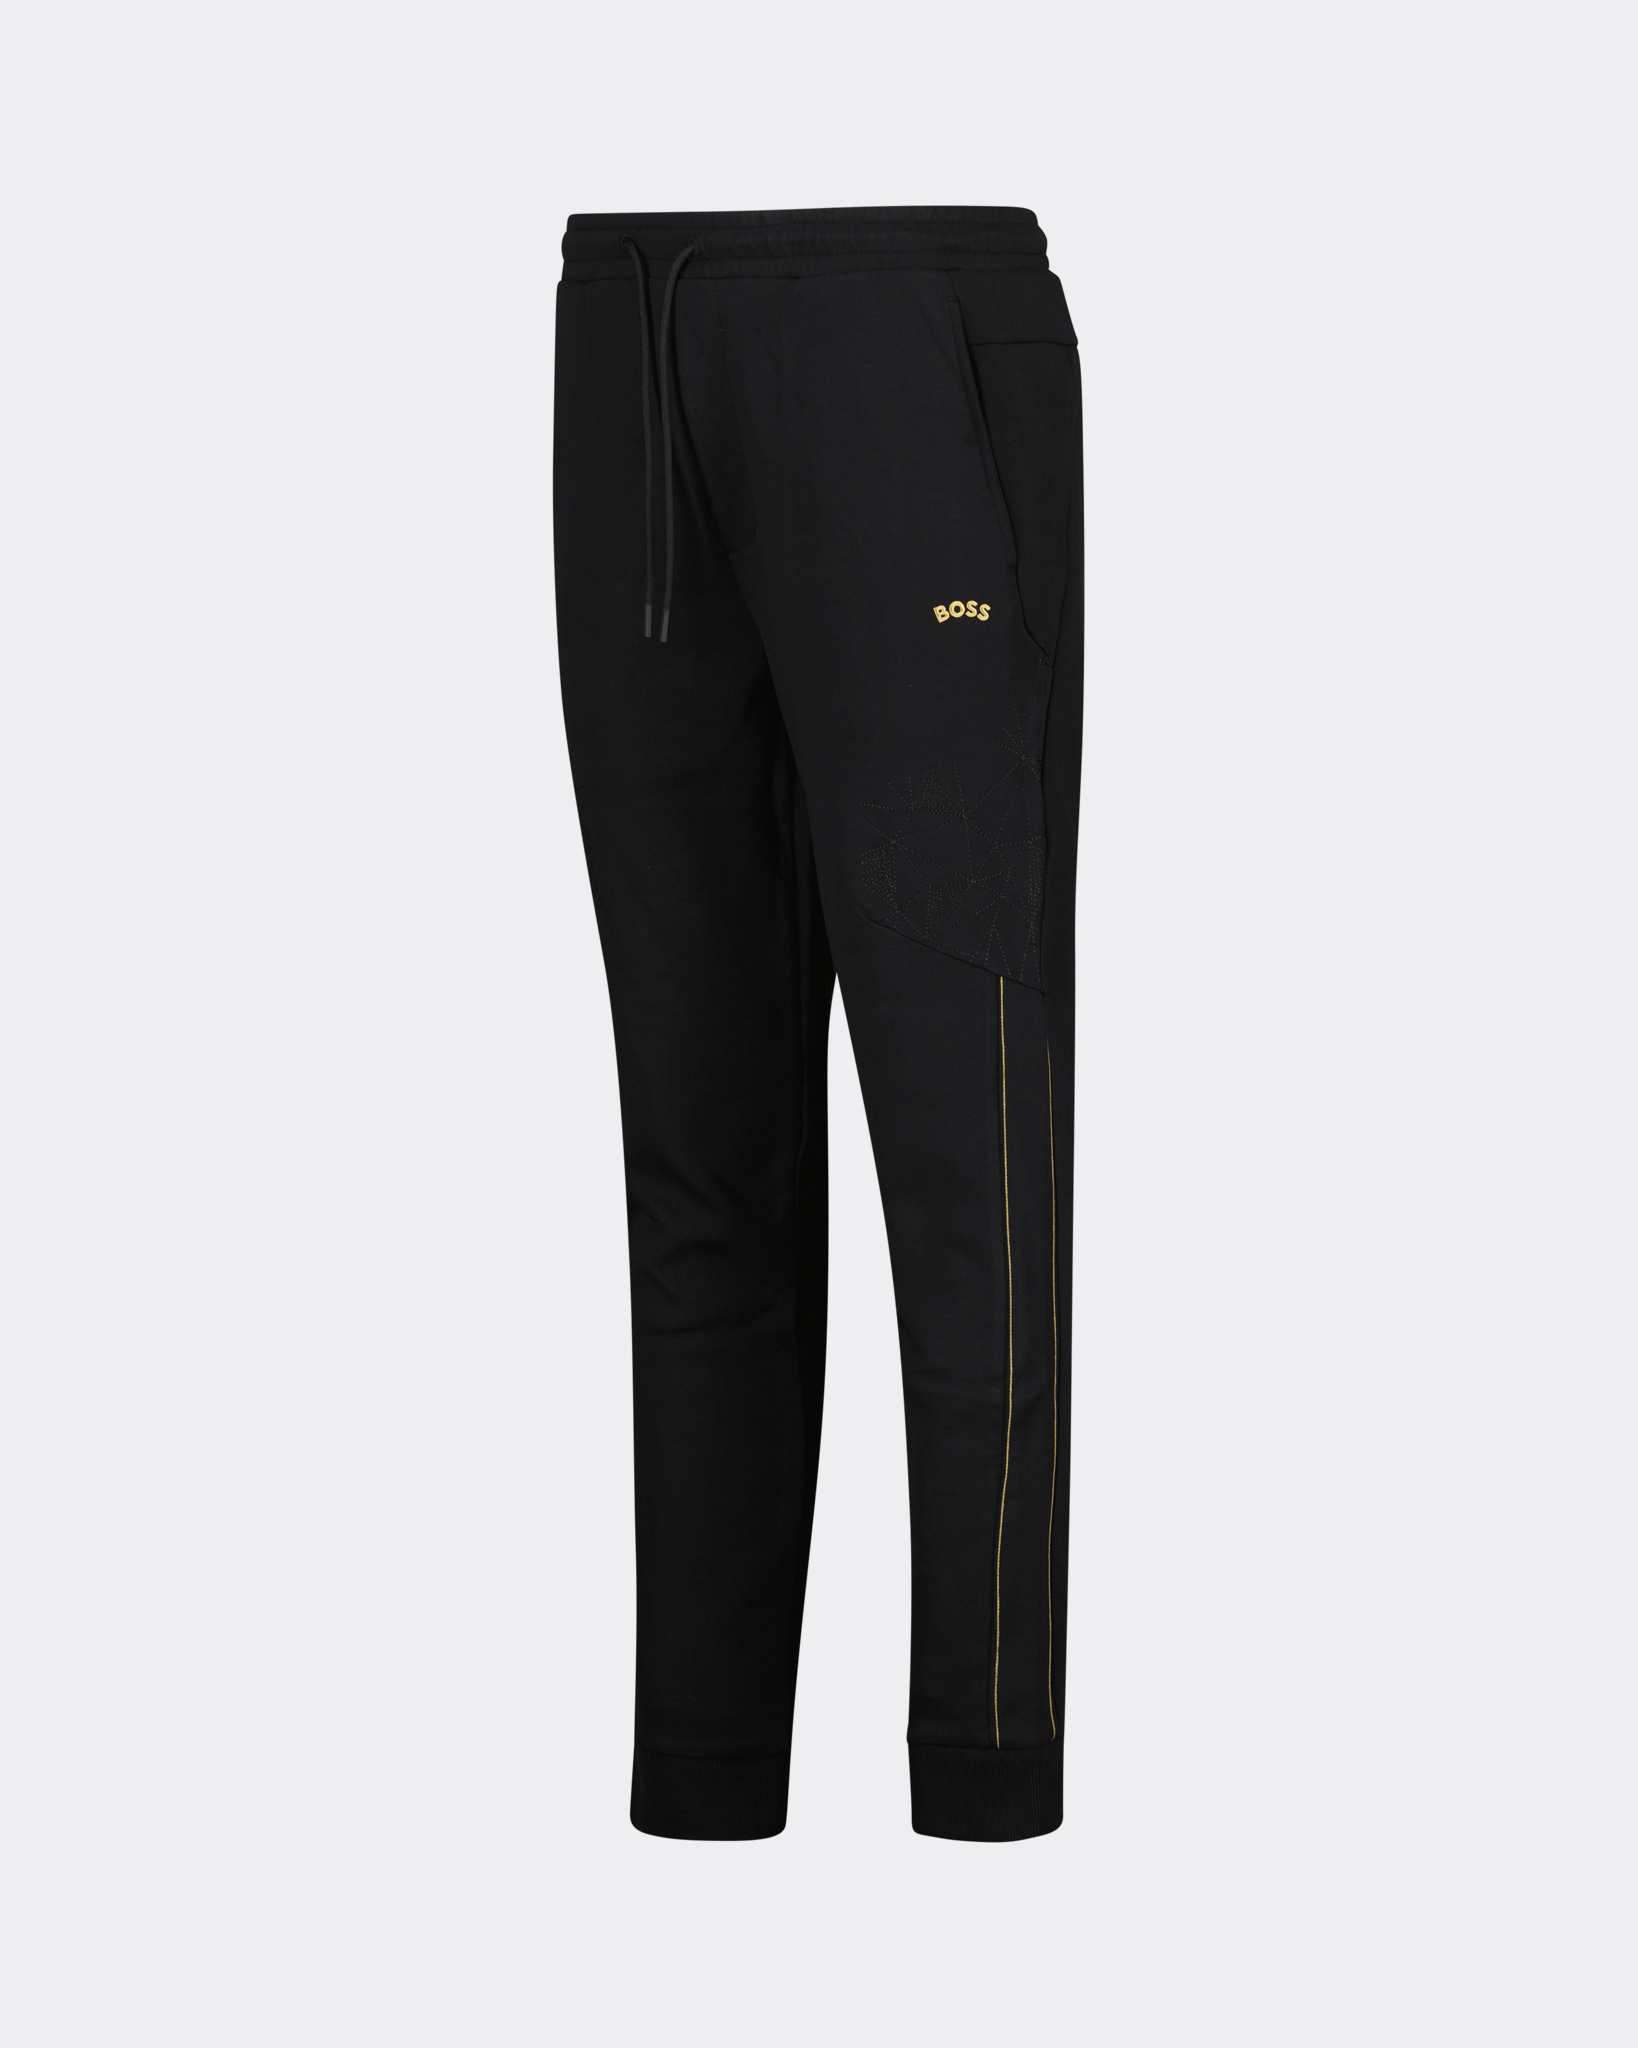 Black Solid Full Length Active Wear Men Slim Fit Track Pants - Selling Fast  at Pantaloons.com